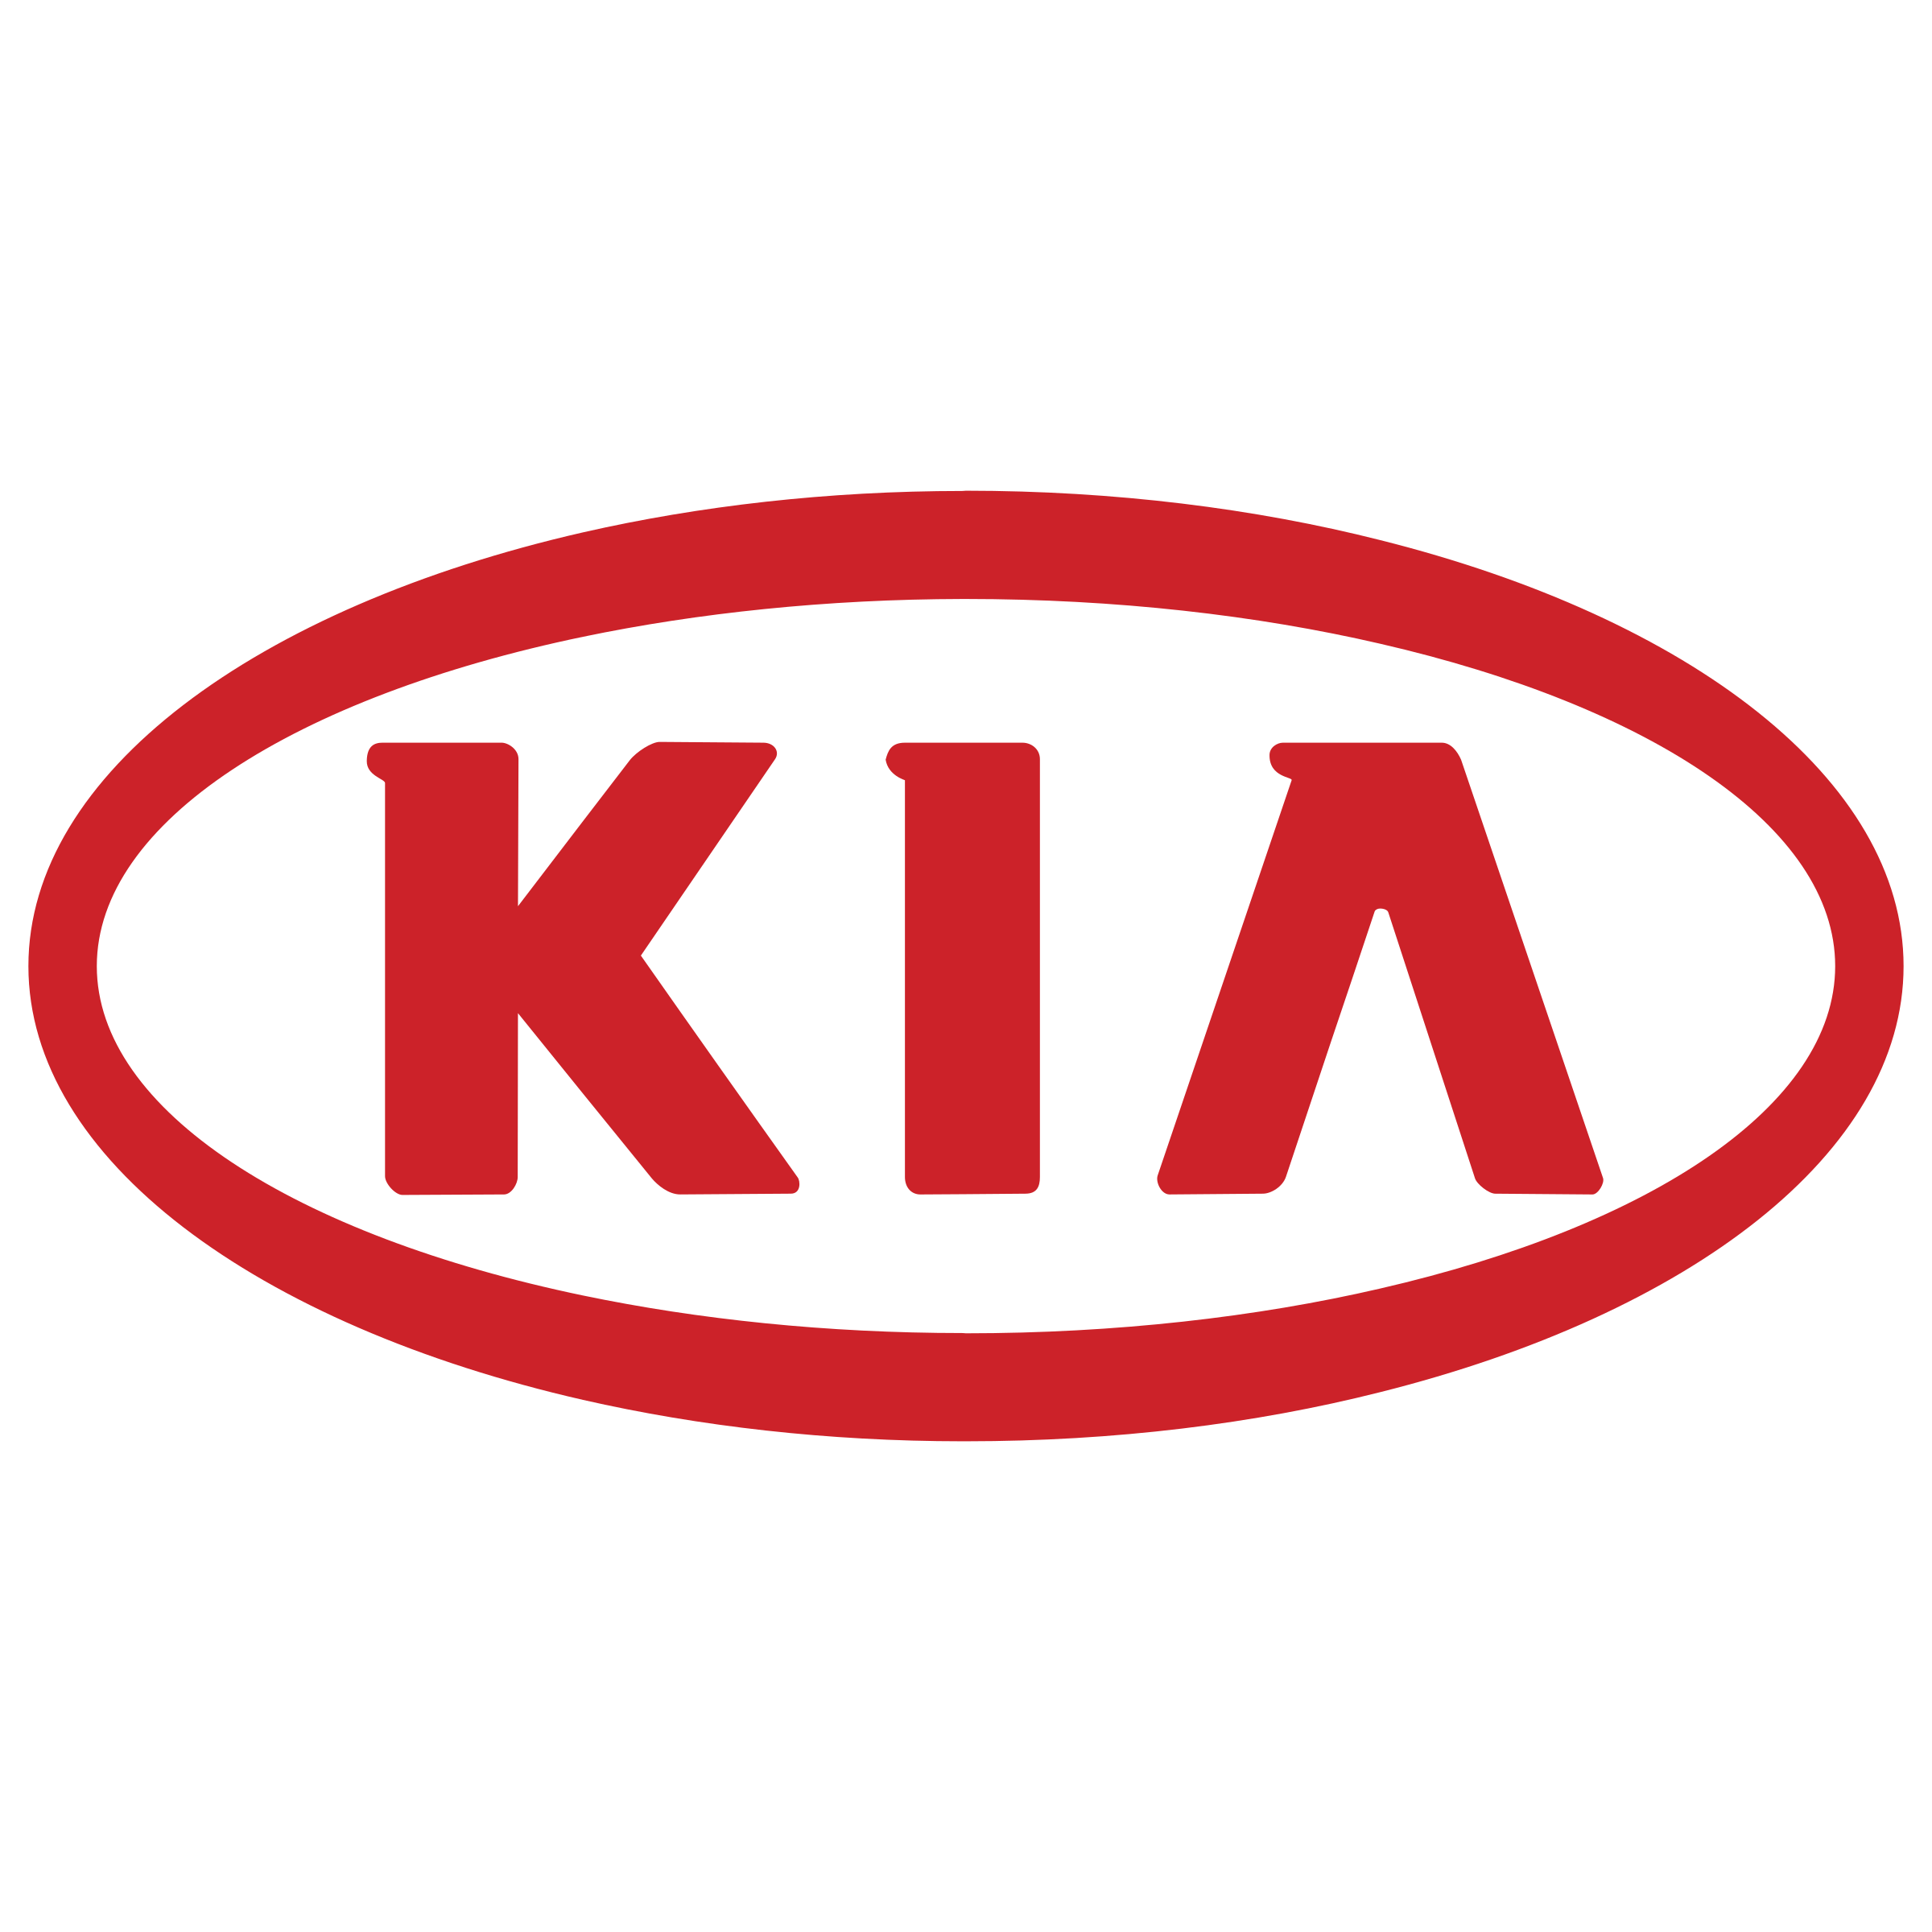 Kia Logo Image Posted By Etha